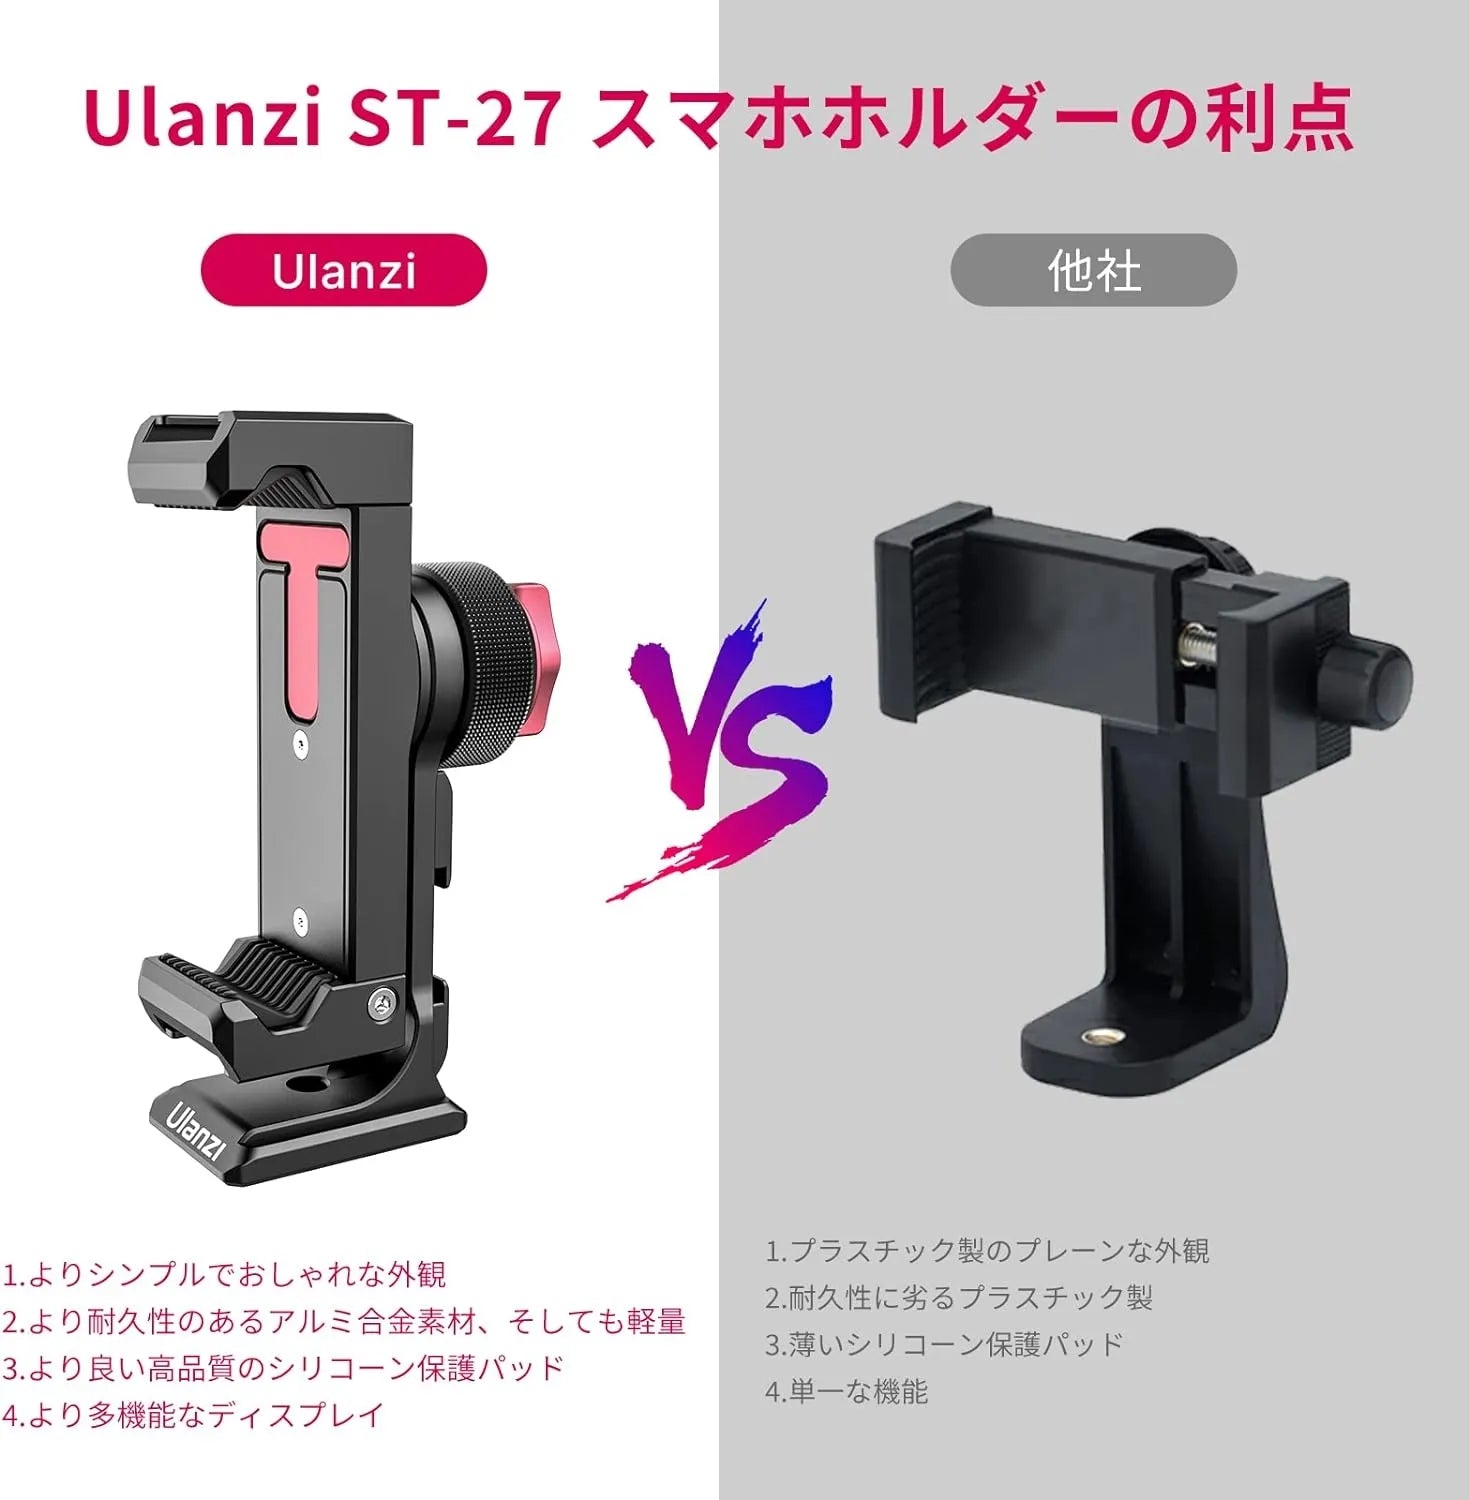 Ulanzi ST-27 金属製携帯電話用三脚マウントクリップ 2476